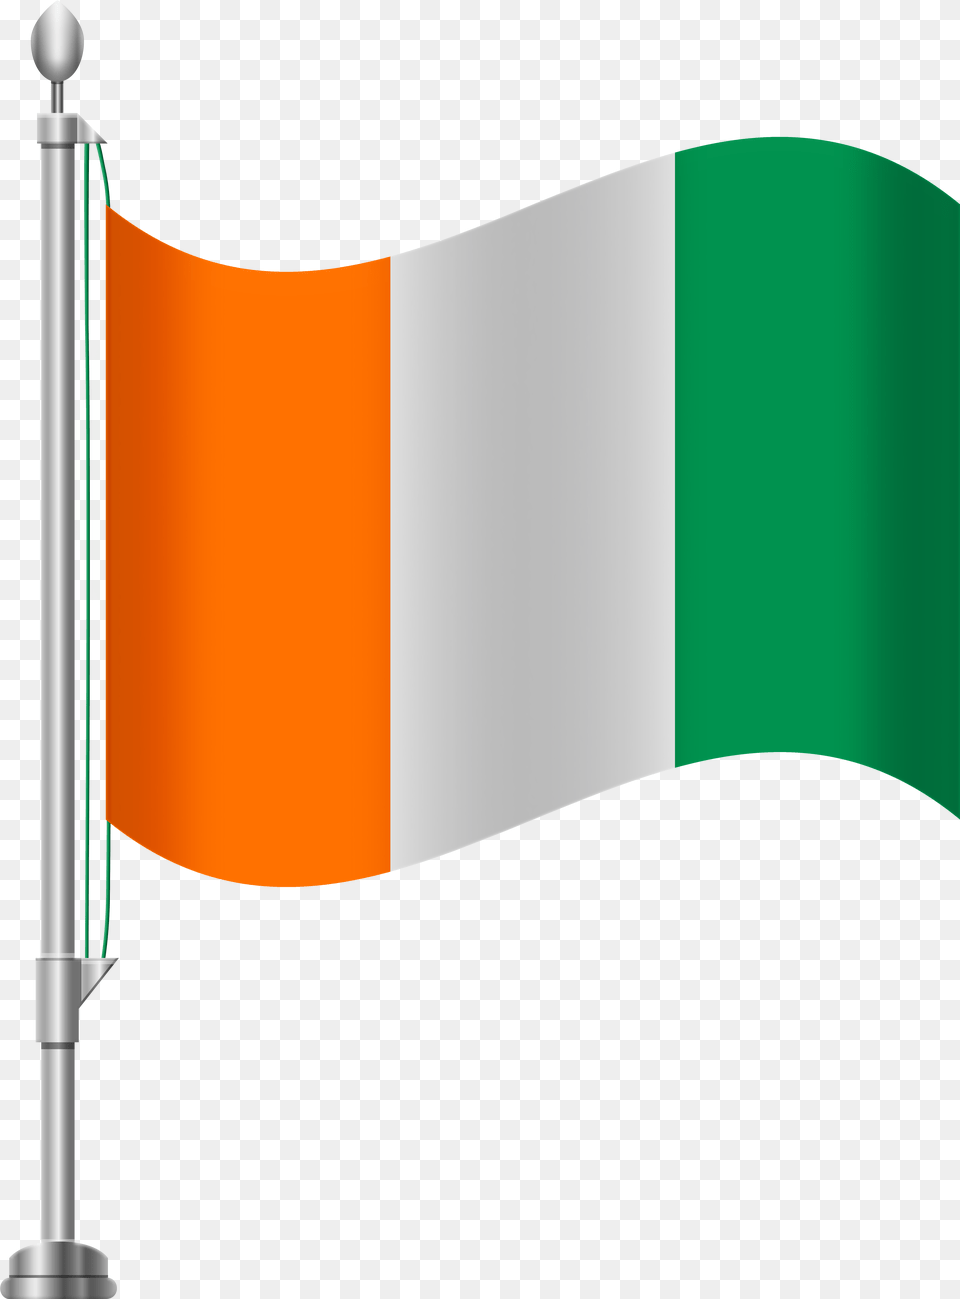 Cote D Ivoire Flag Clip Art, Smoke Pipe Png Image